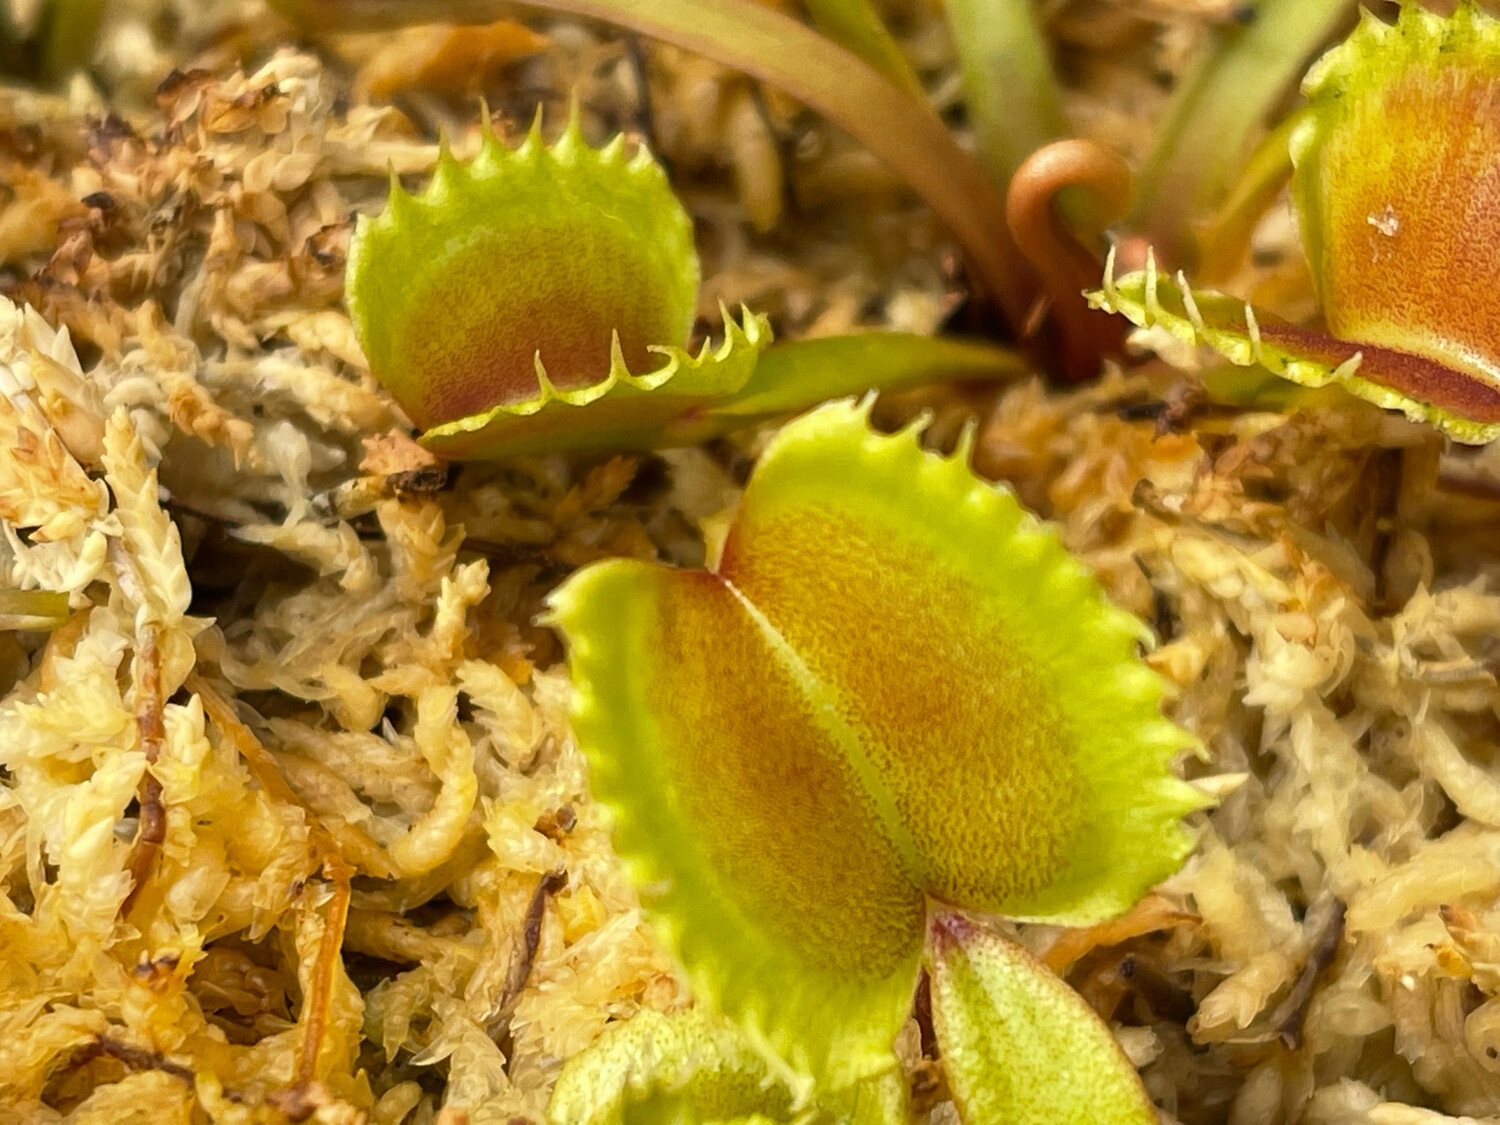 Dionaea muscipula  “Giant Werewolf “Venus Flytrap (small)